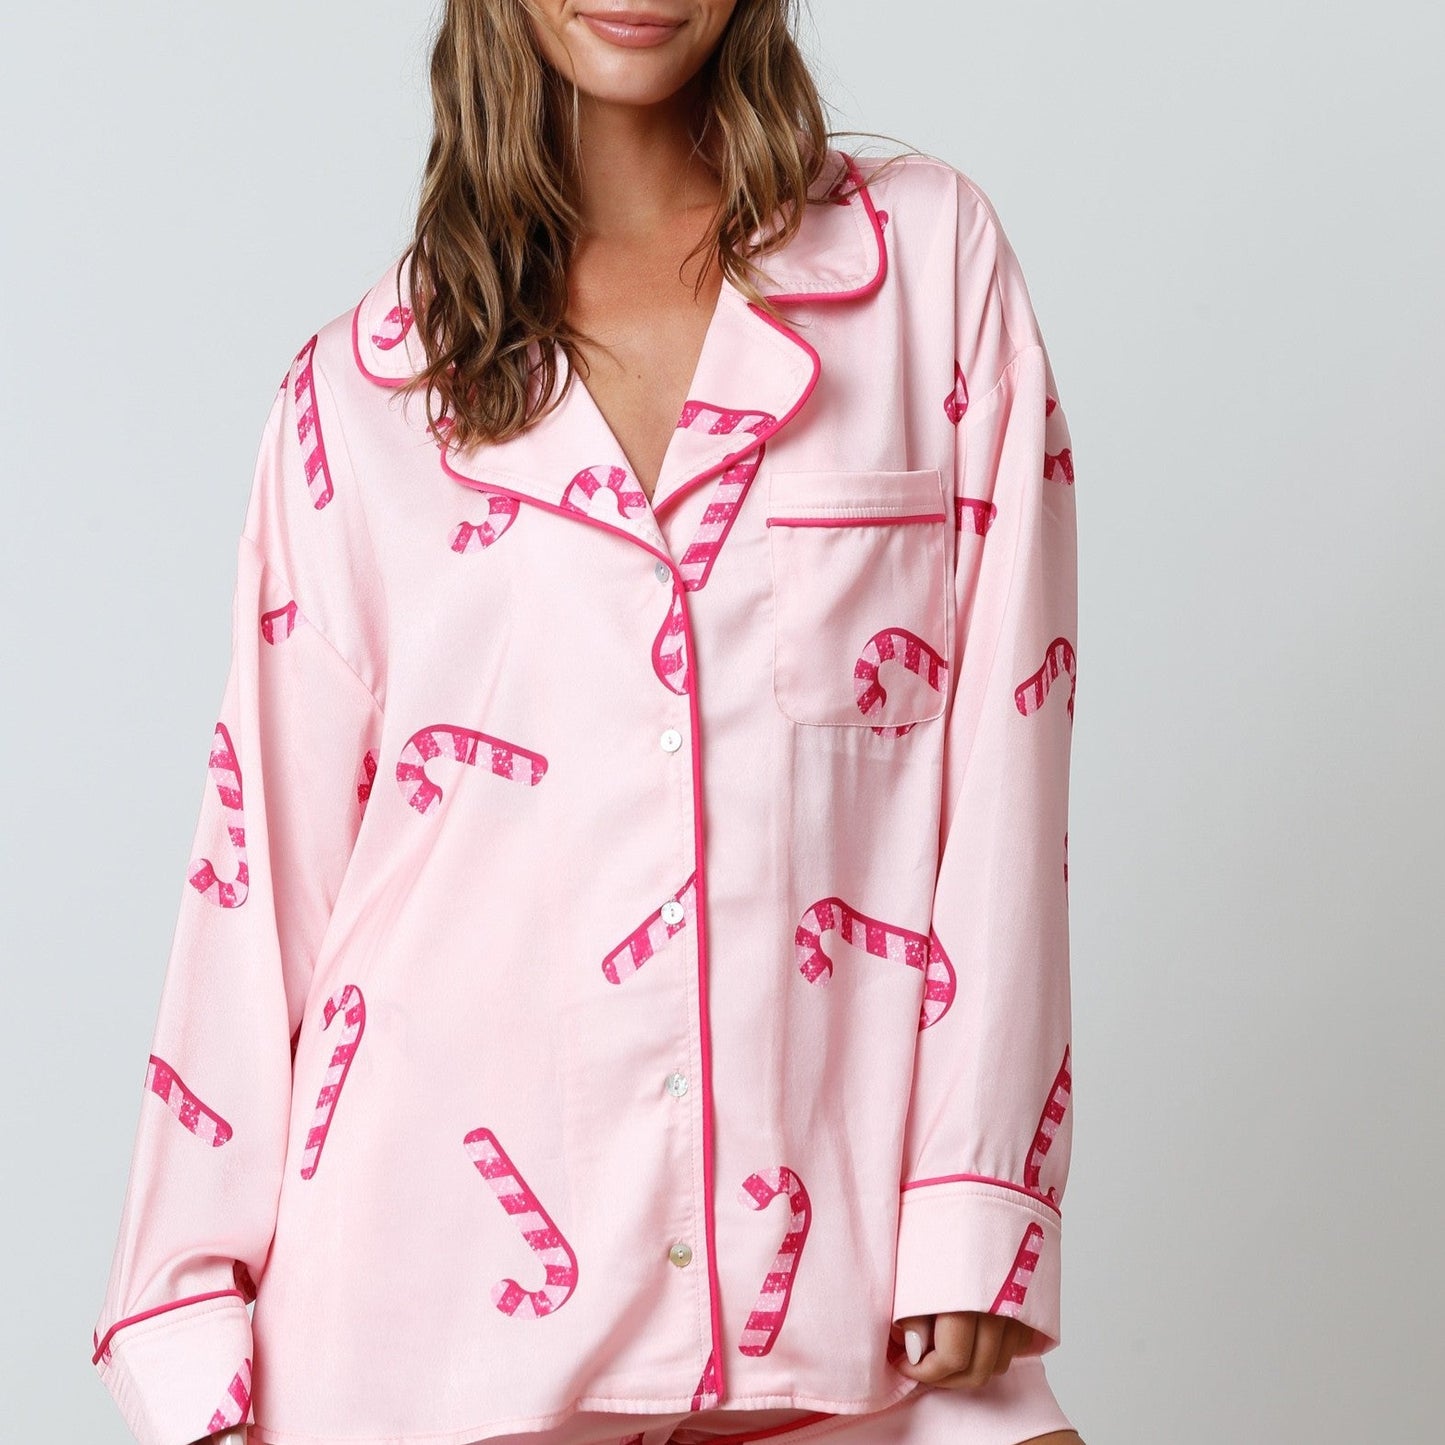 Candy Cane Pattern Satin Pajama Shirt